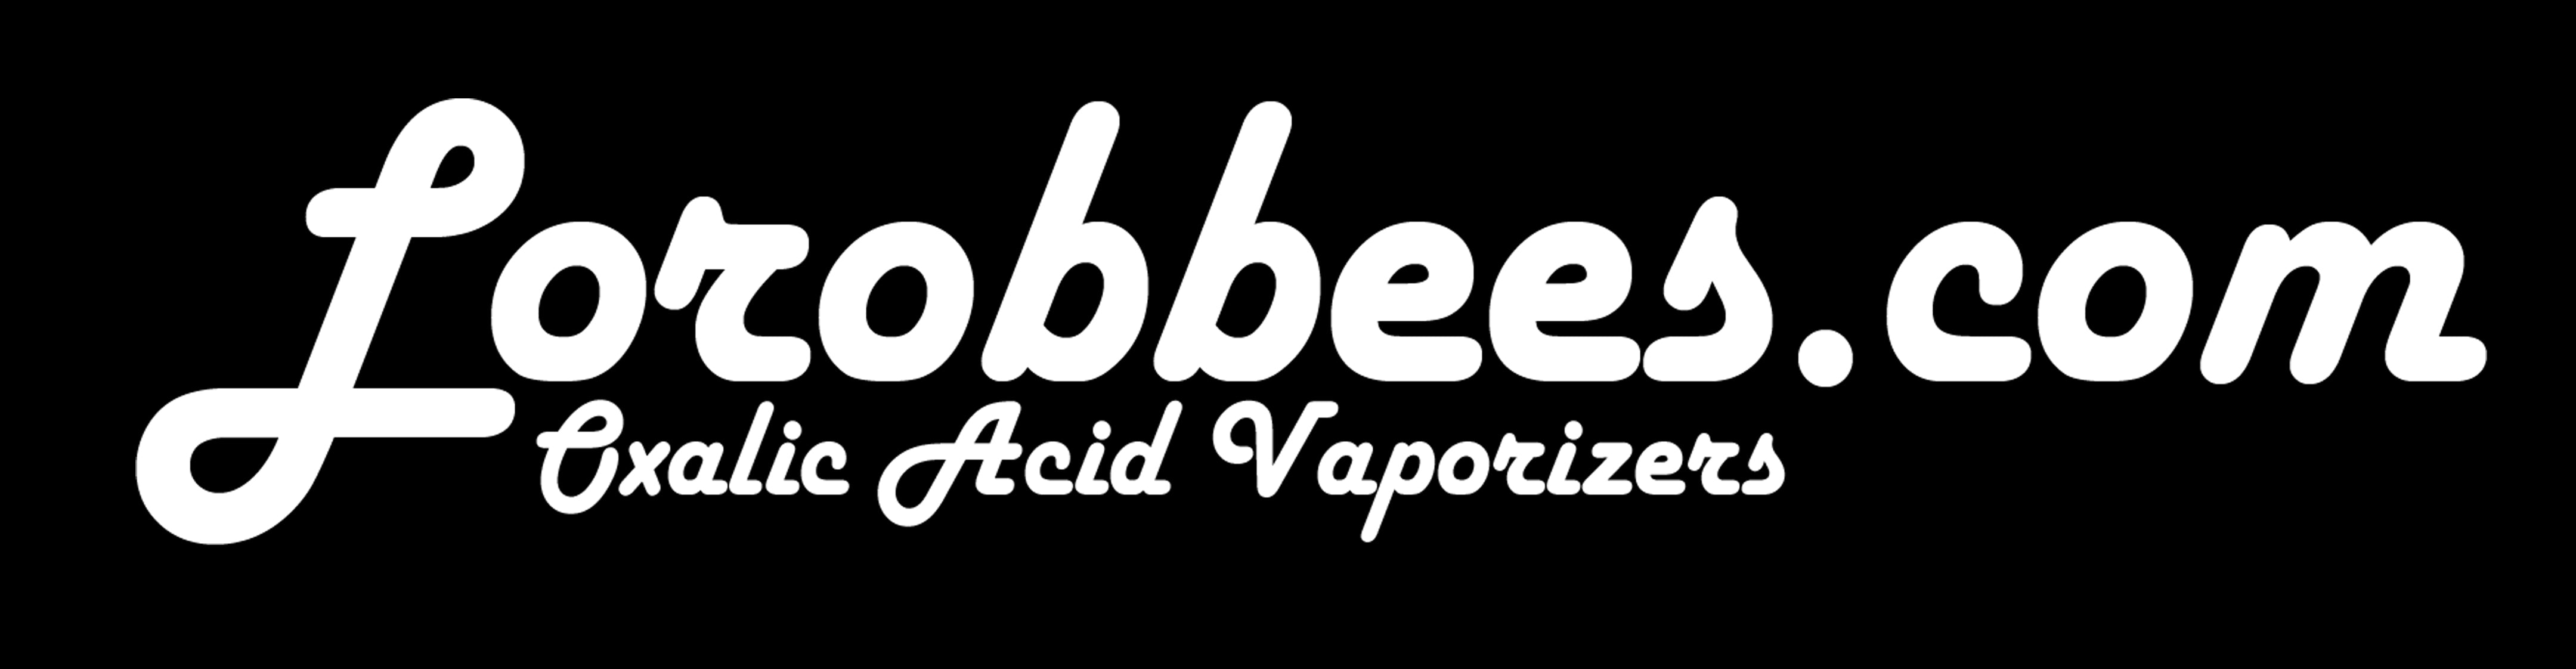 Lorob Bees LLC